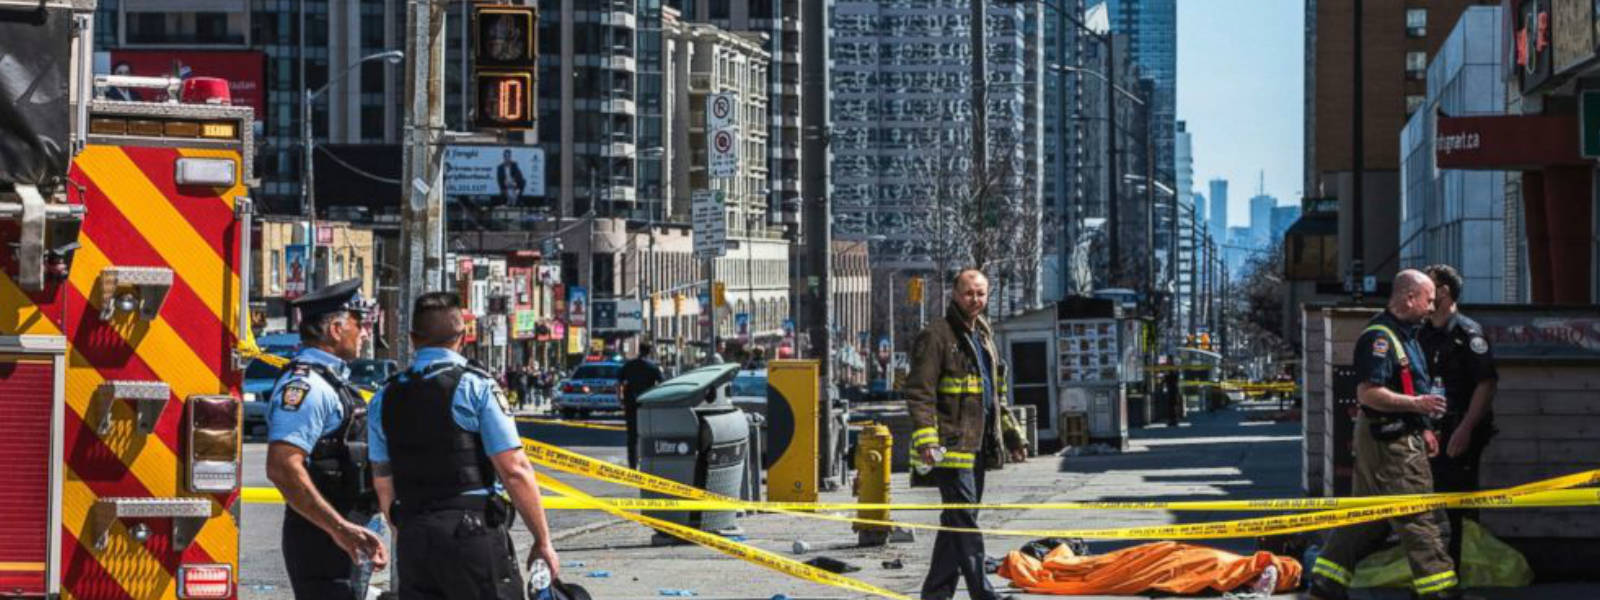 Van speed across Toronto sidewalk, leaving 10 dead